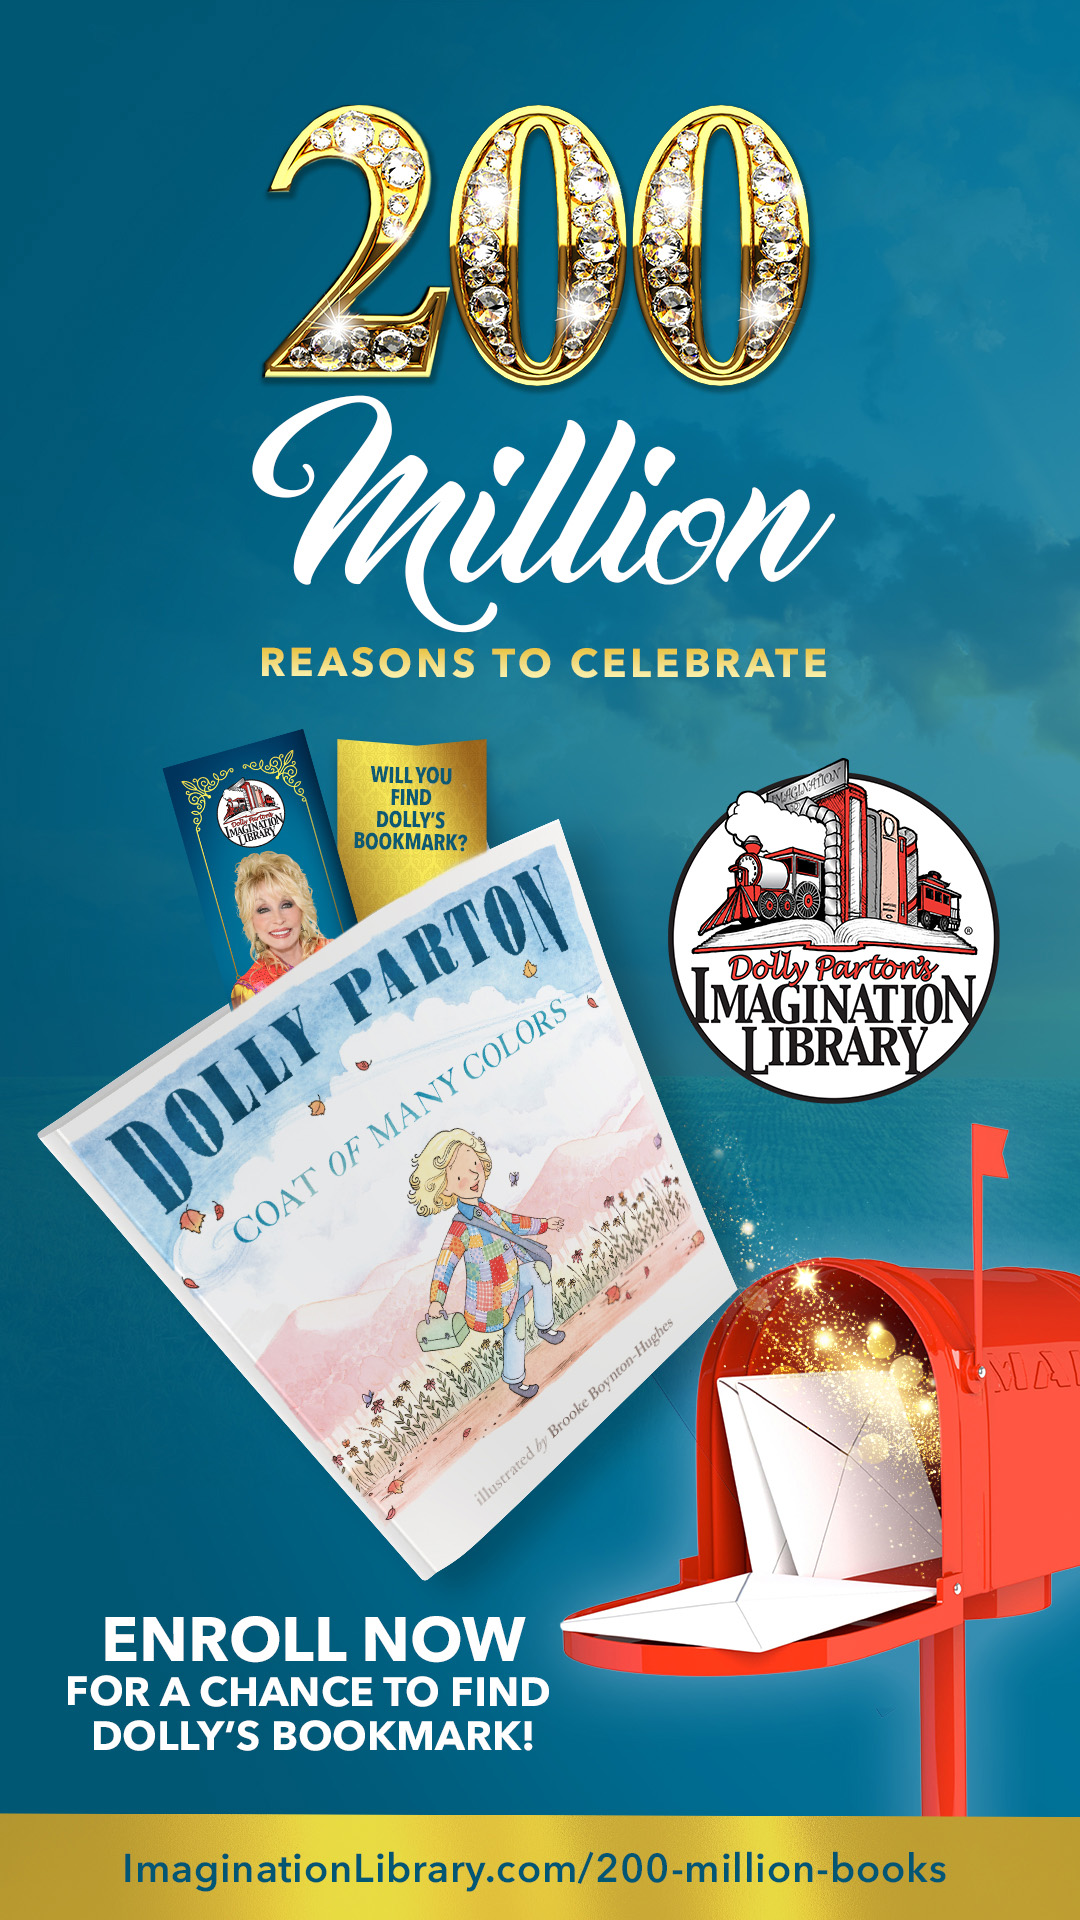 JOIN DOLLY’S 200 MILLIONTH BOOK CELEBRATION!